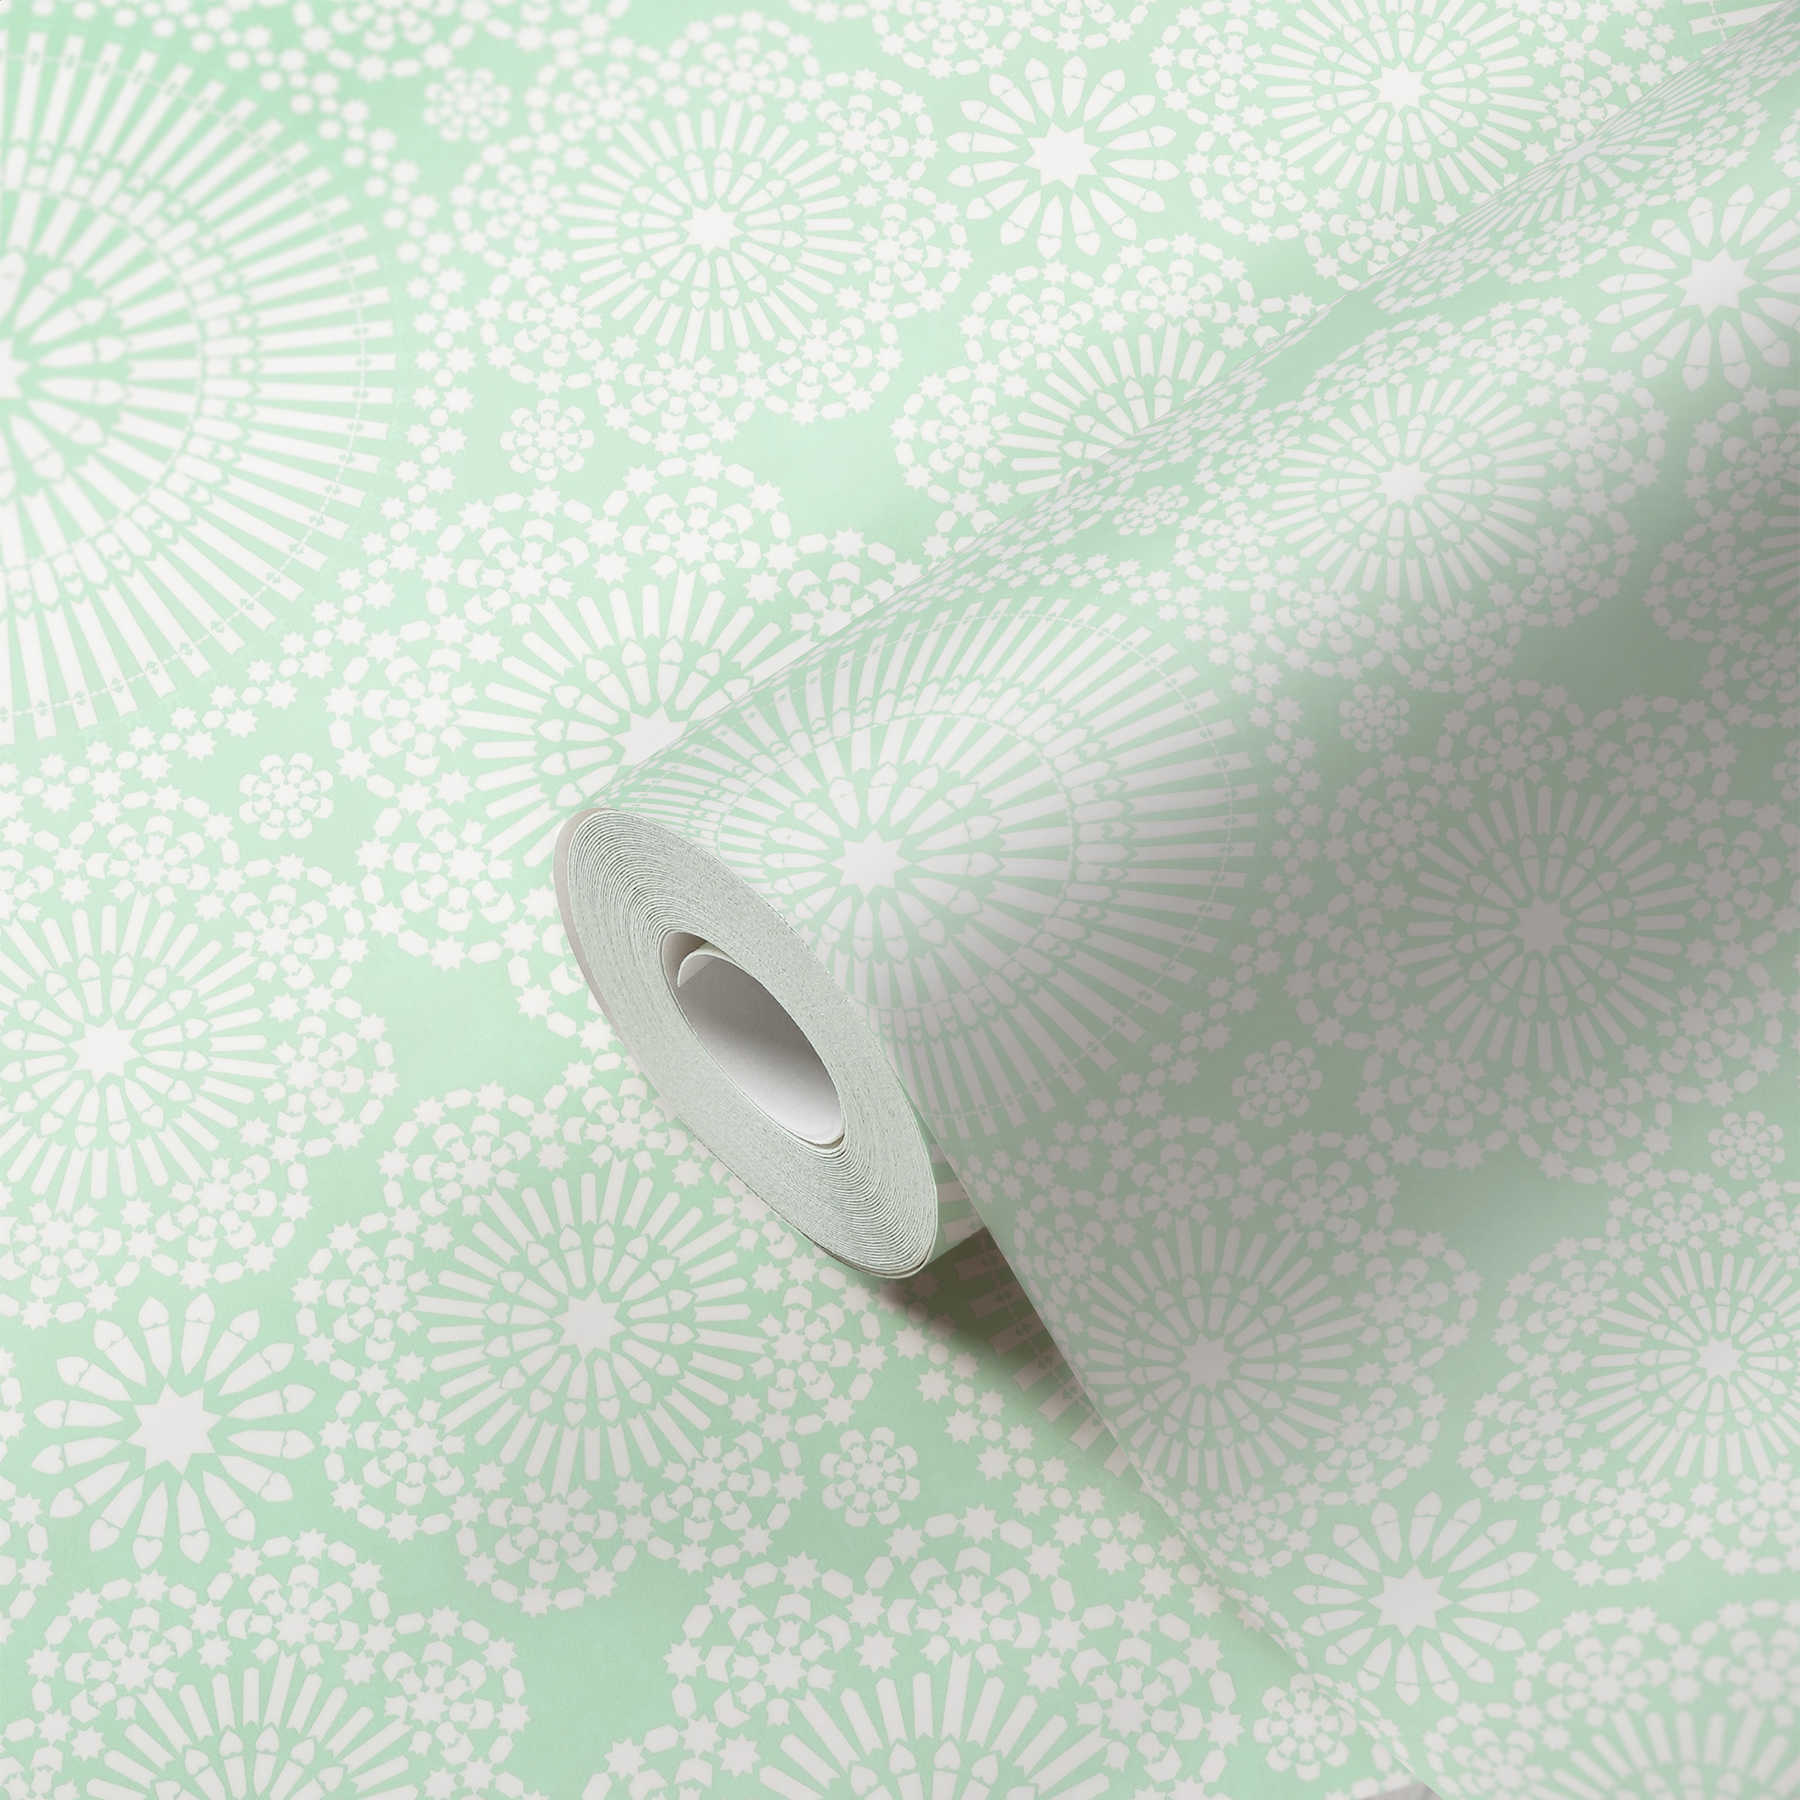             Papier peint Mandala avec design floral - bleu, vert, blanc
        